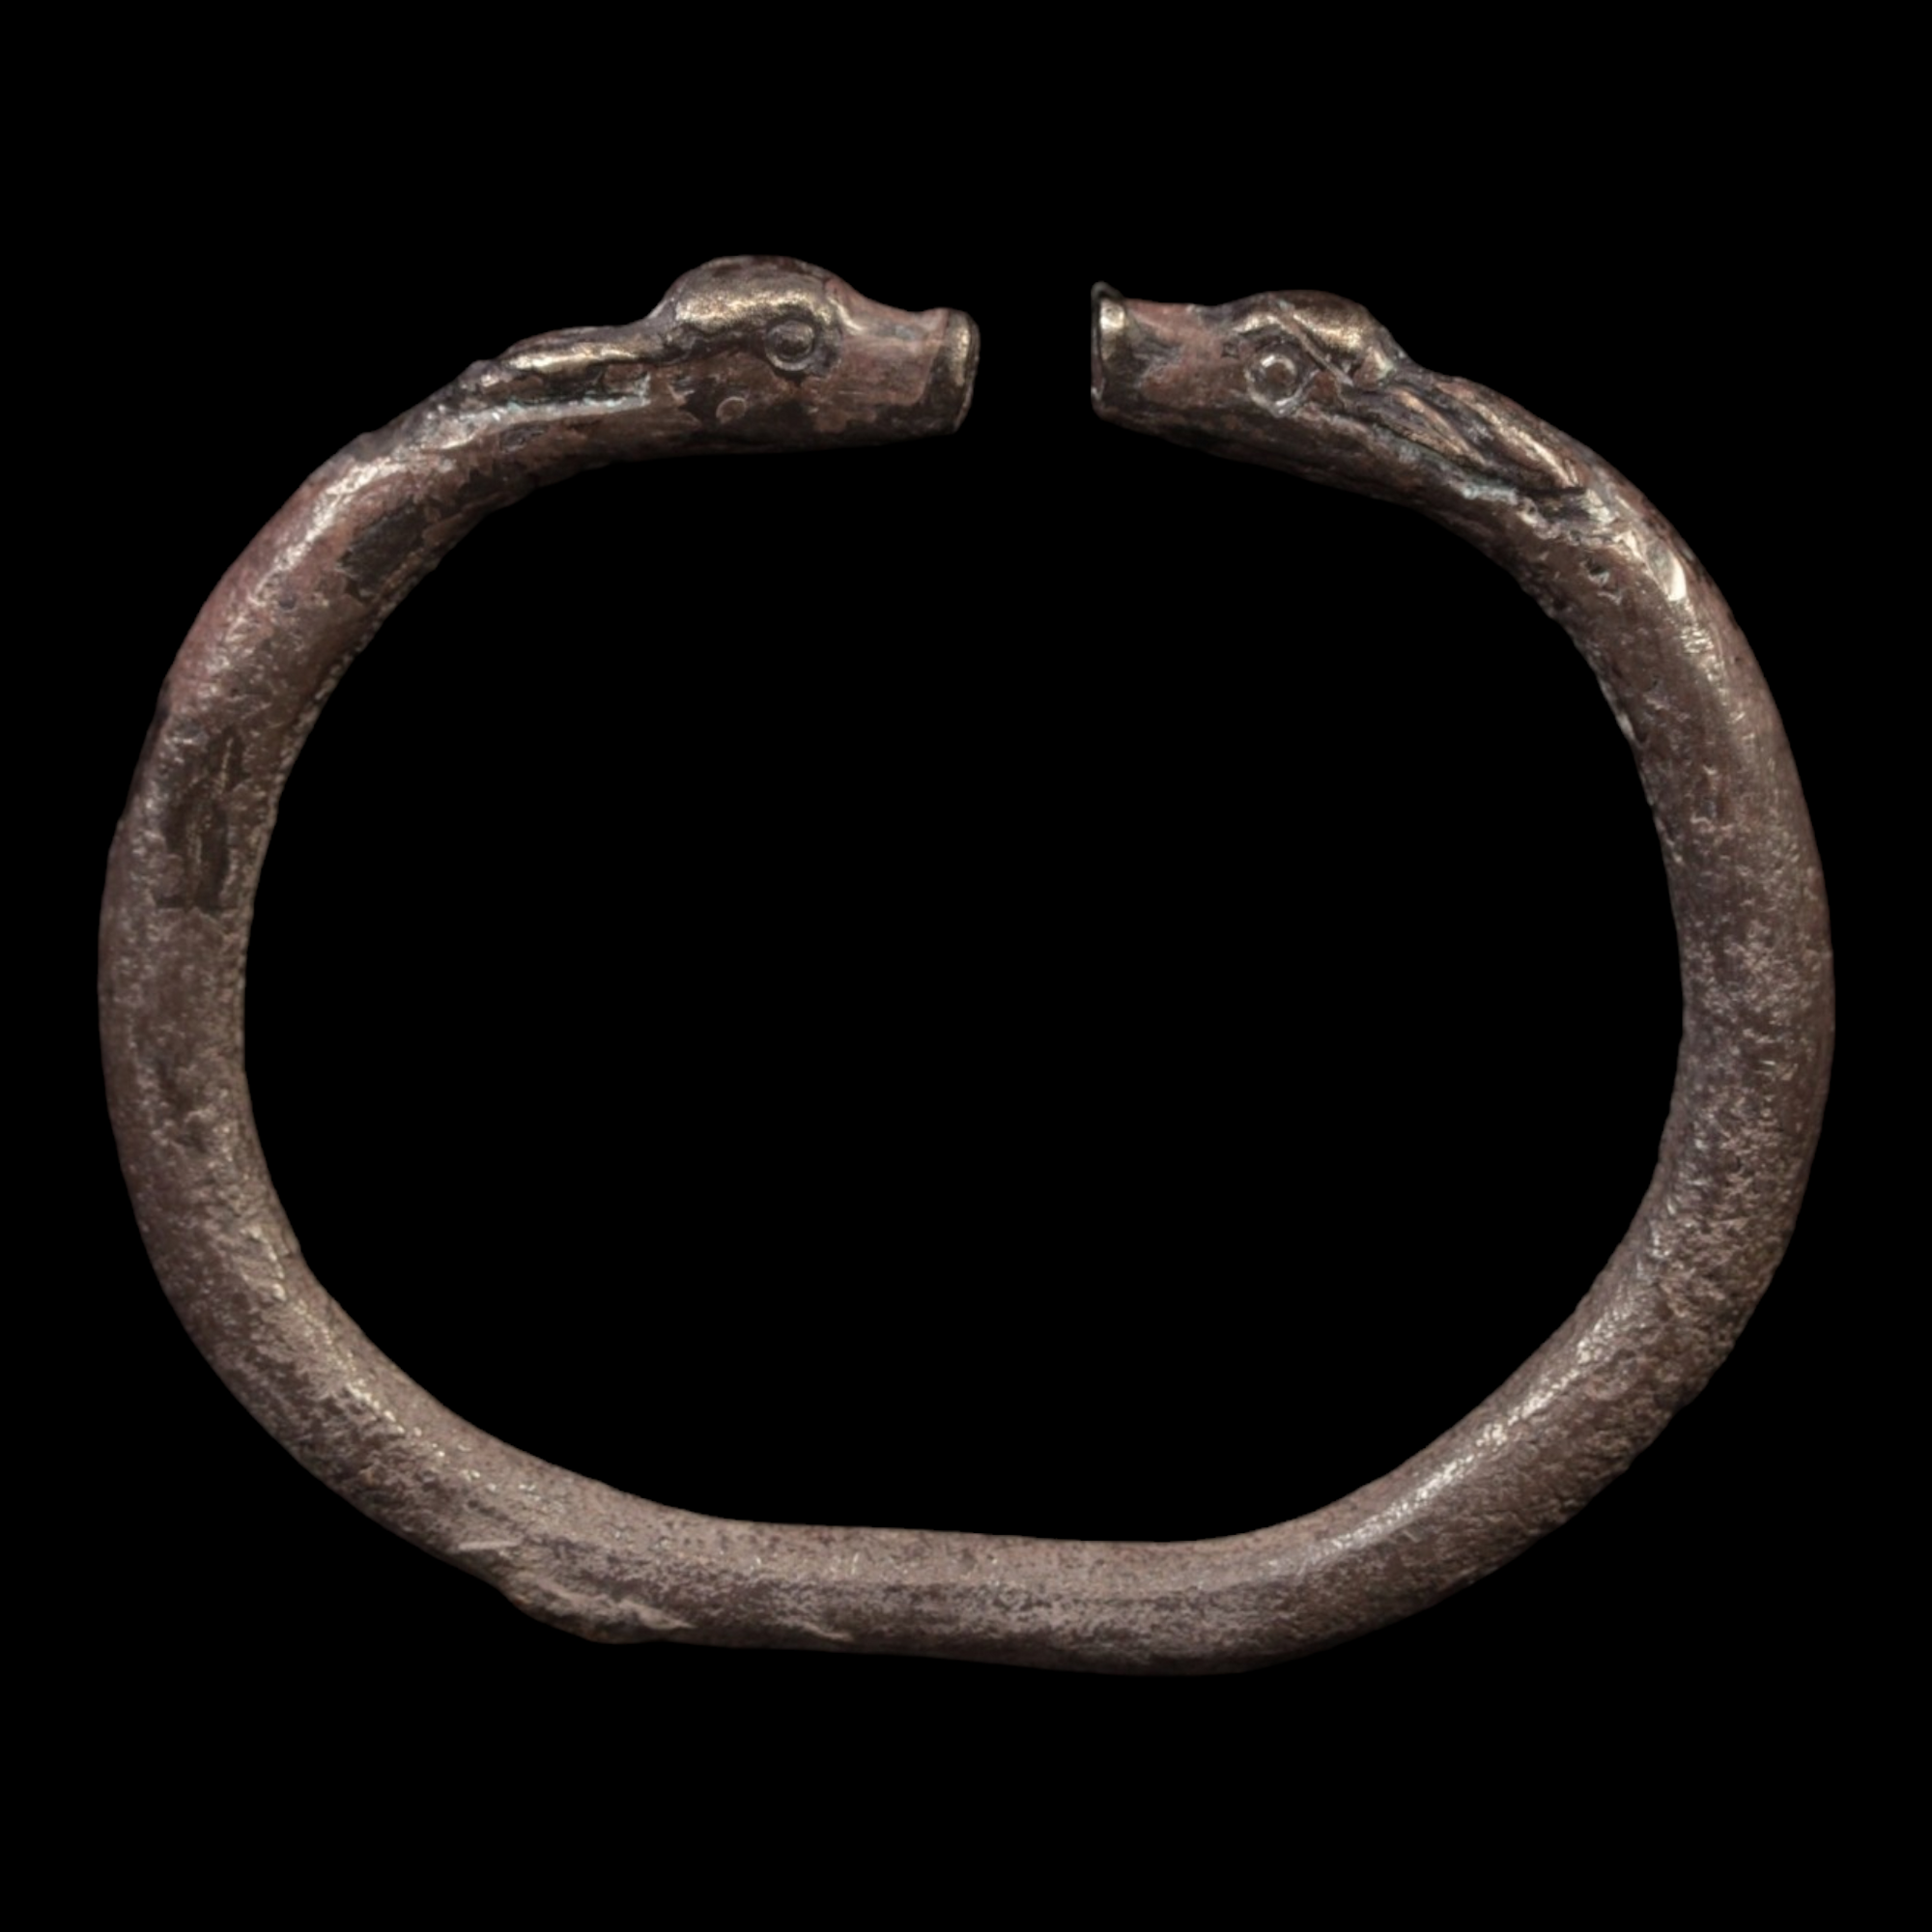 Achaemenid Empire, Goat Headed Silver Bracelet (64mm, 34.56g) - c. 530 to 350 BCE - Ancient Persia